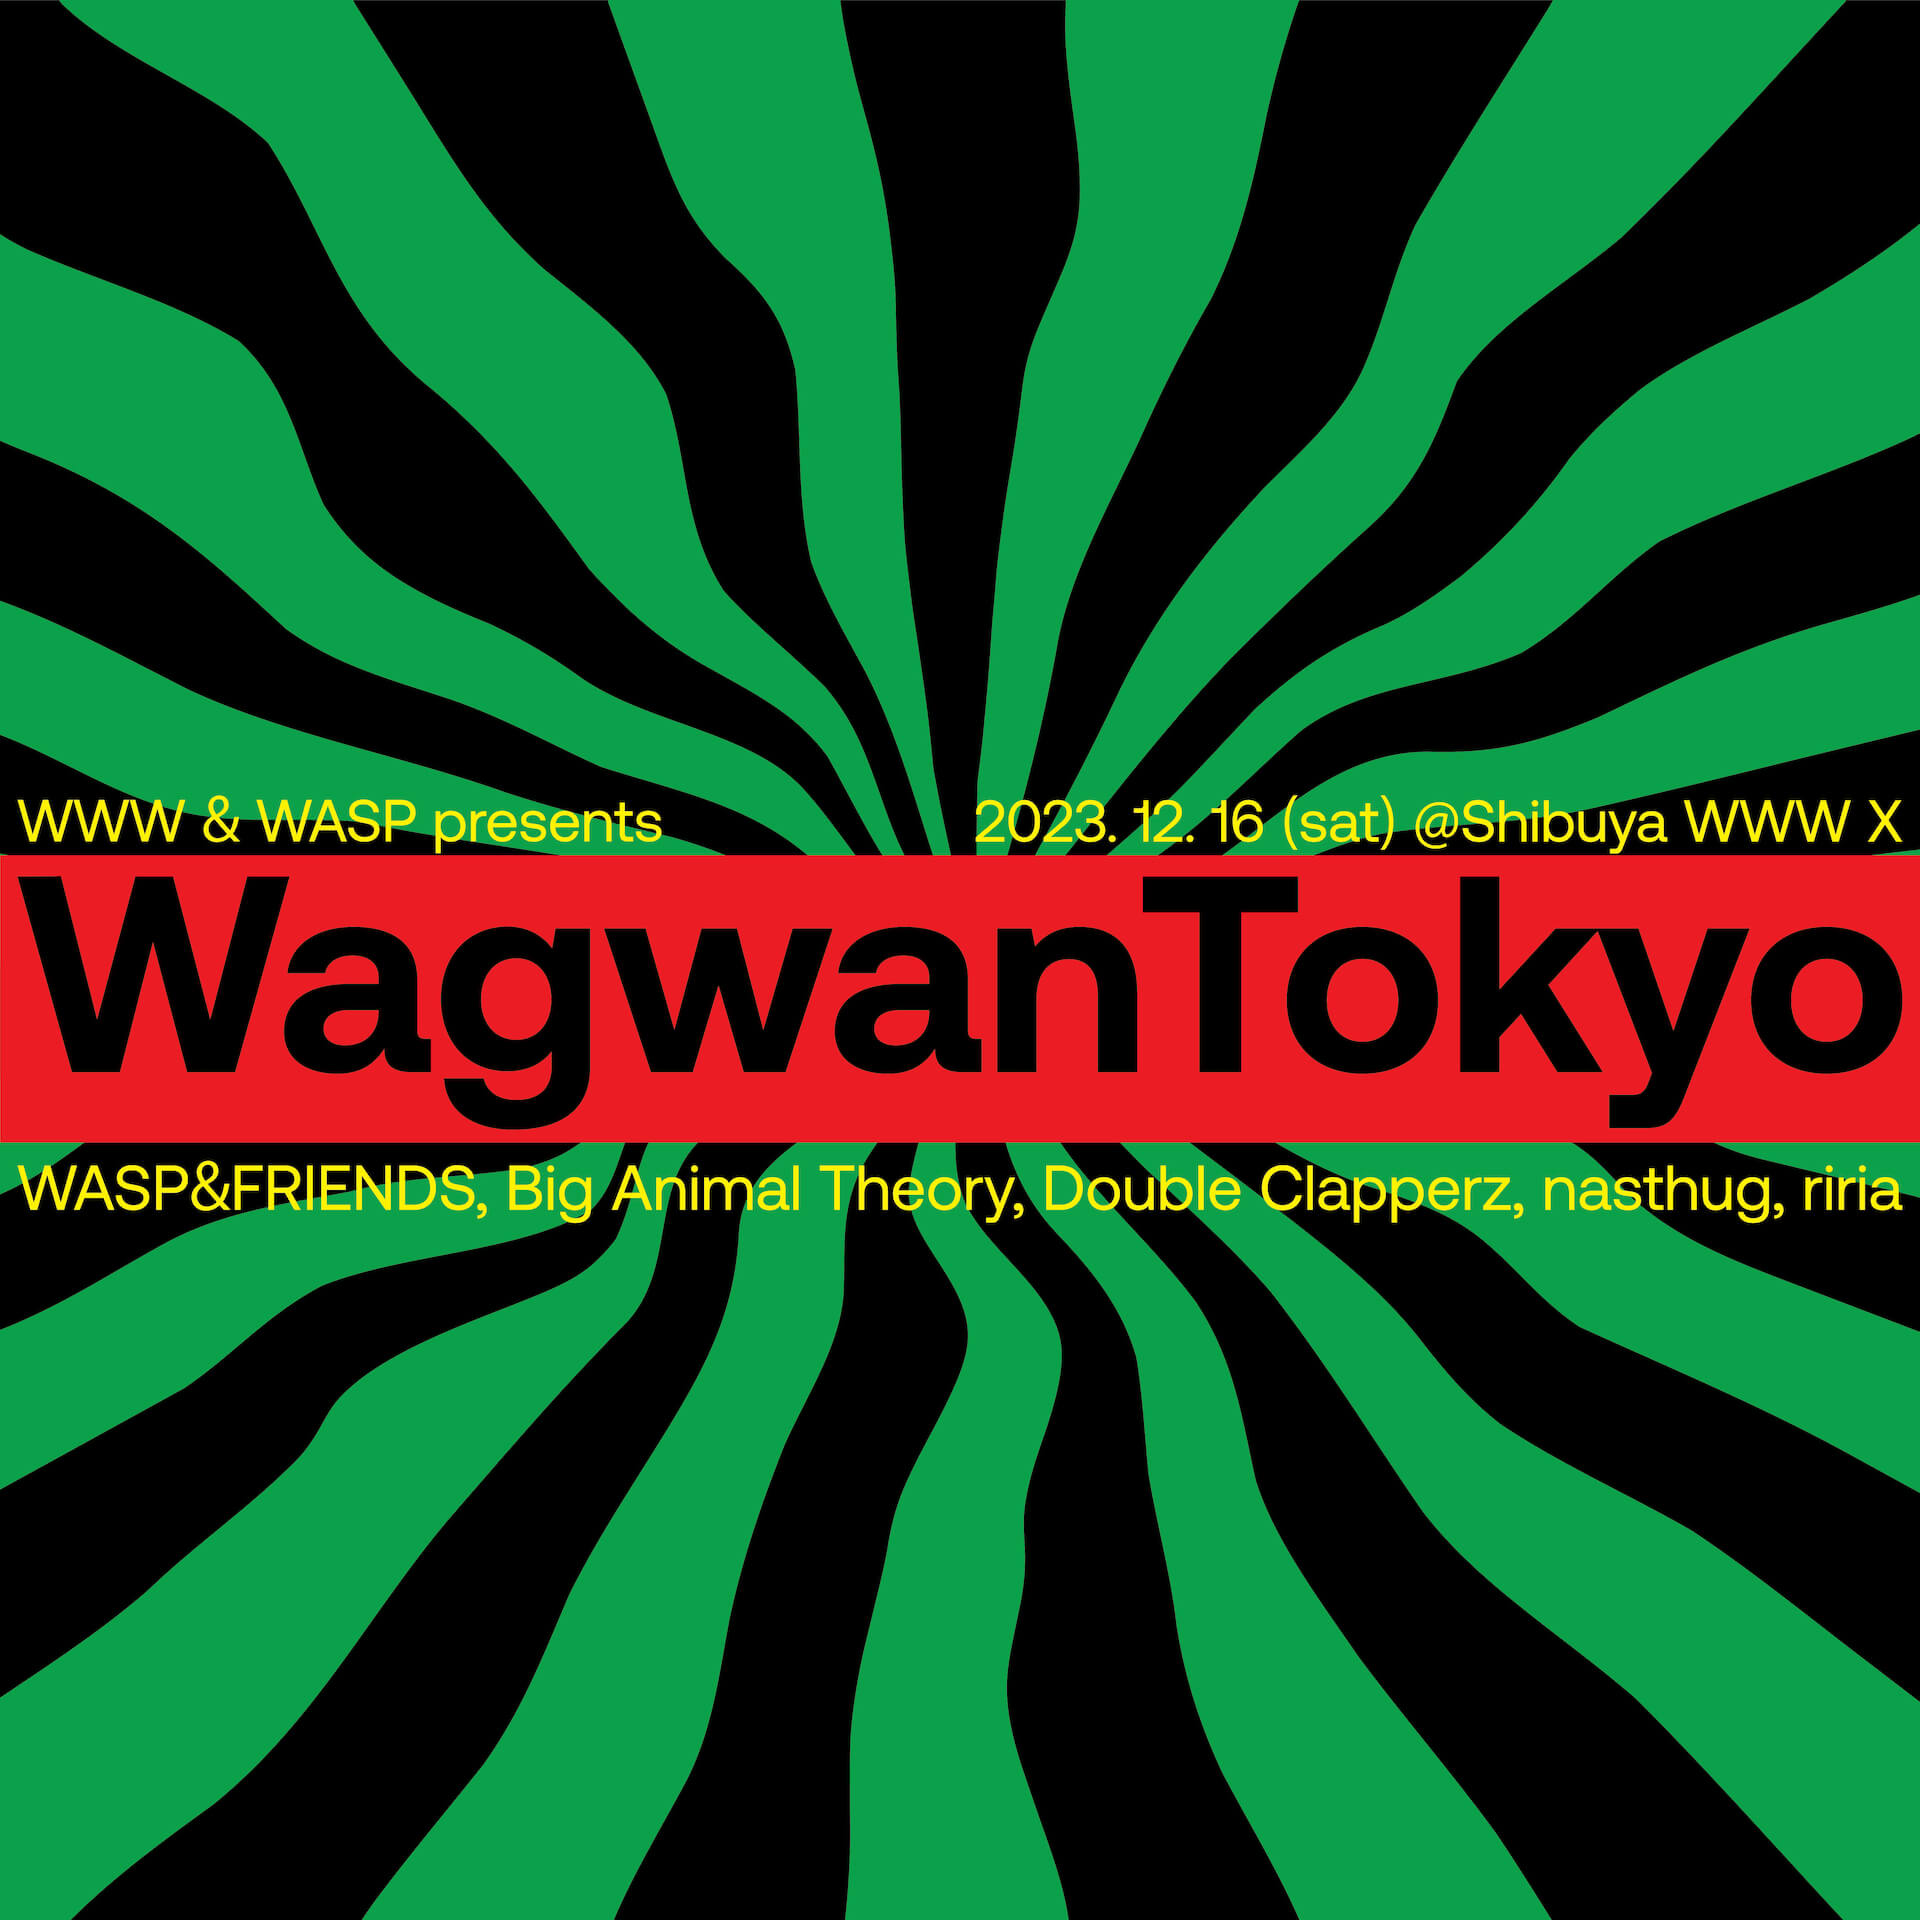 DJユニット・WASPとWWWの共同企画＜WagwanTokyo＞にBig Animal Theory、Double Clapperz 、nasthug、ririaらが出演 music231215-wagwantokyo3